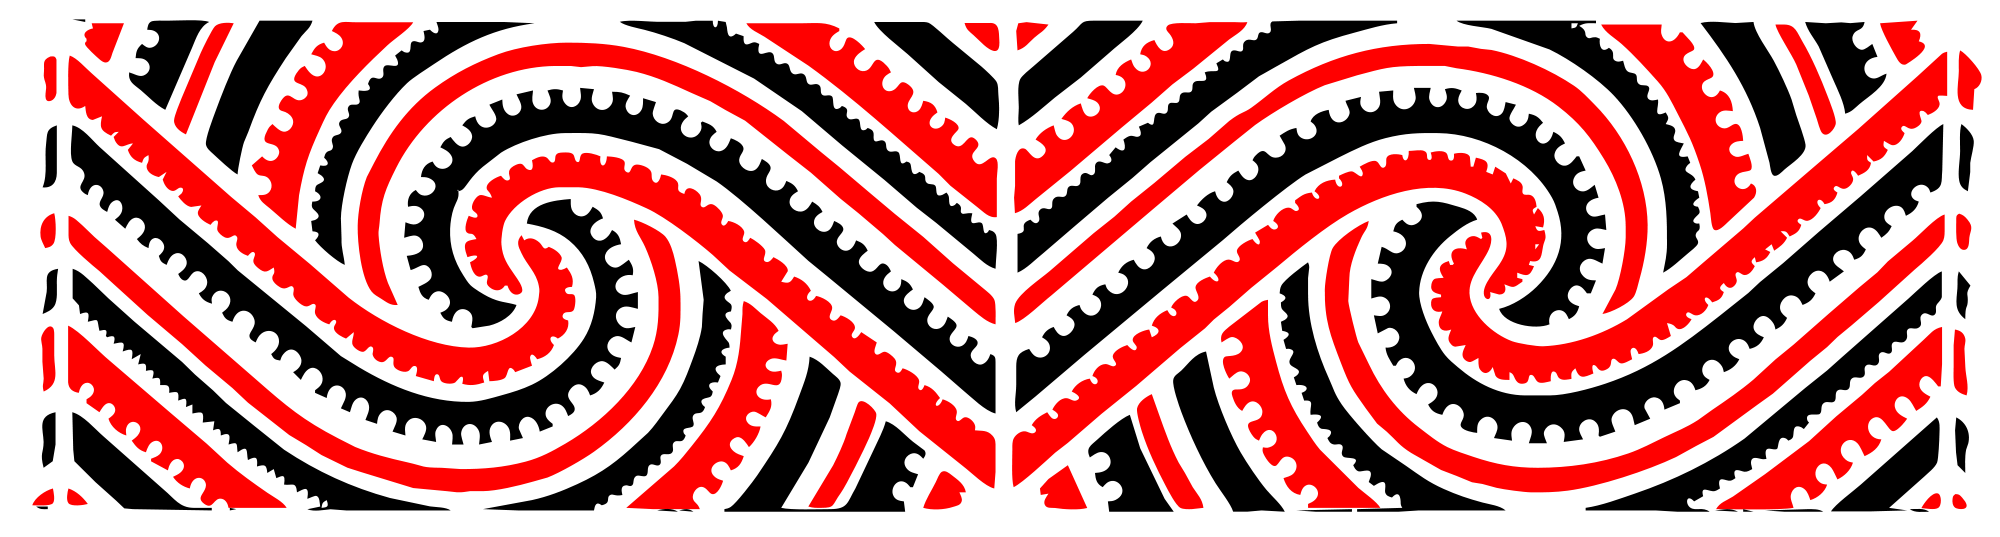 Art Maori Design Waitangi Pattern Download HD PNG Clipart